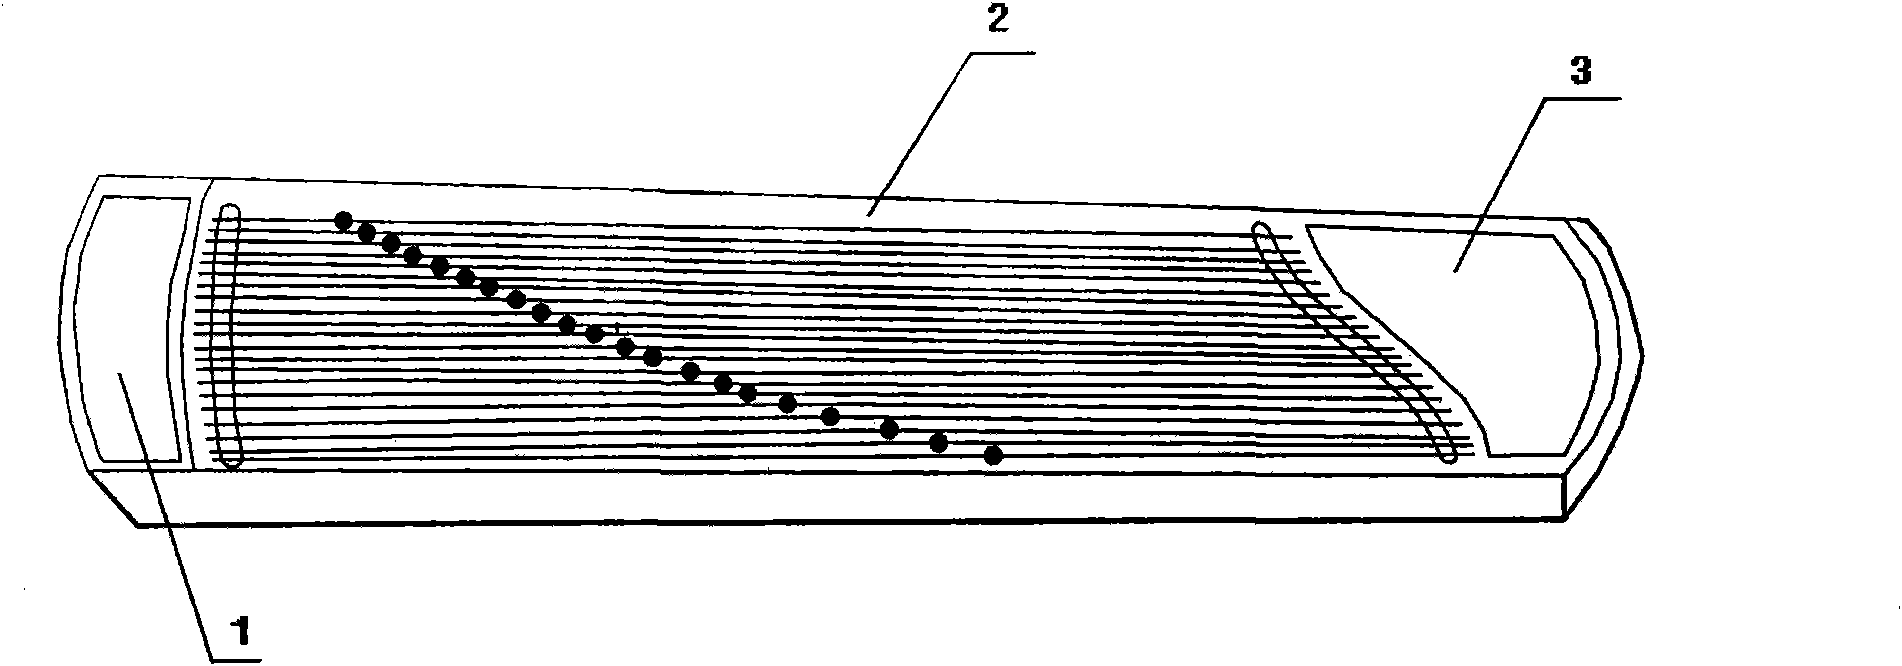 Guzheng soundboard